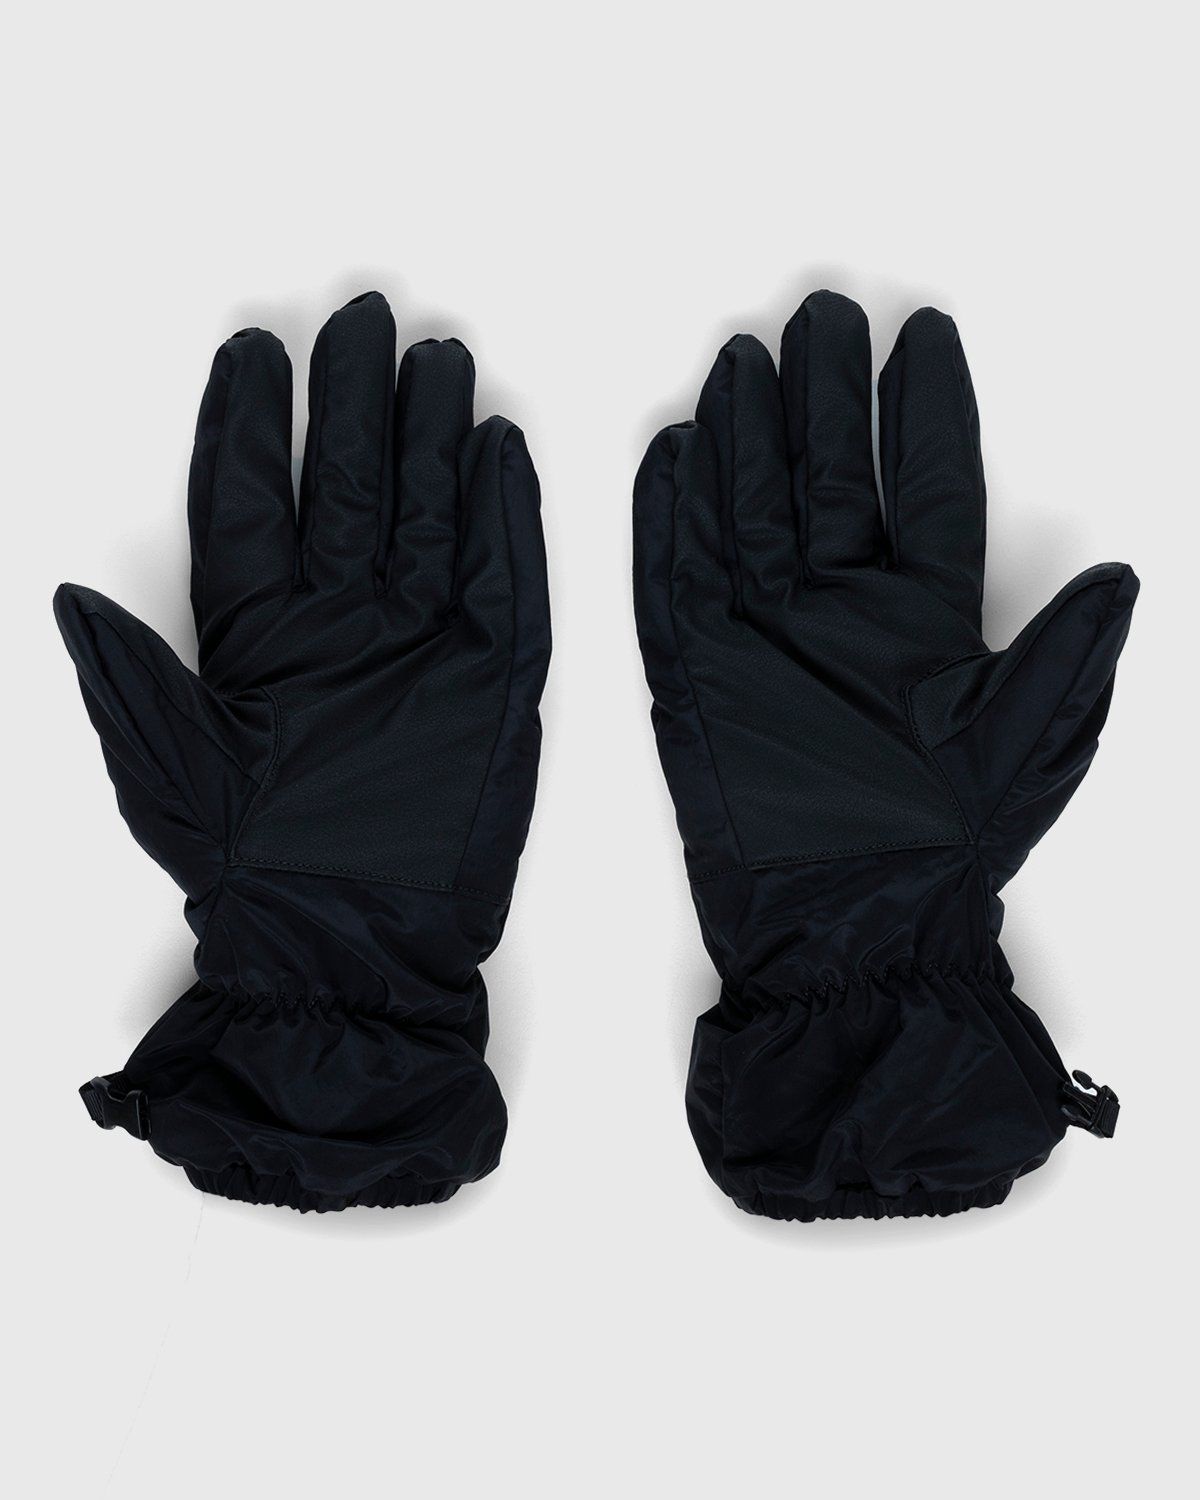 Stone Island – Gloves Black - 5-Finger - Black - Image 3